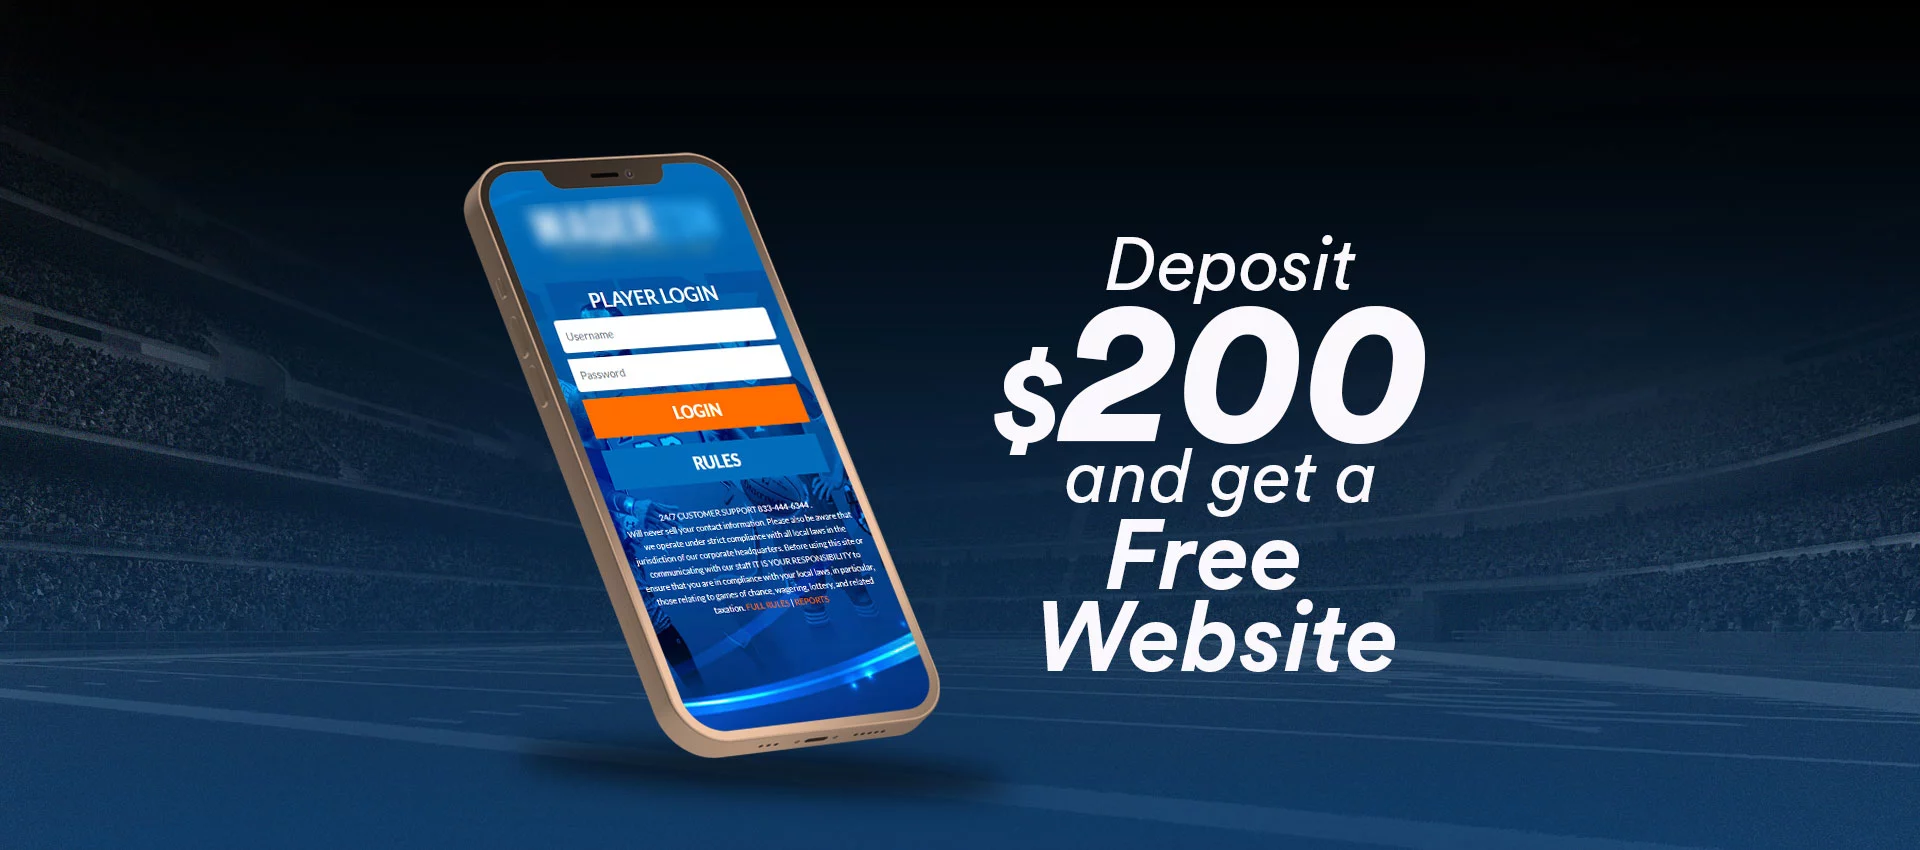 Free website with $200 deposit